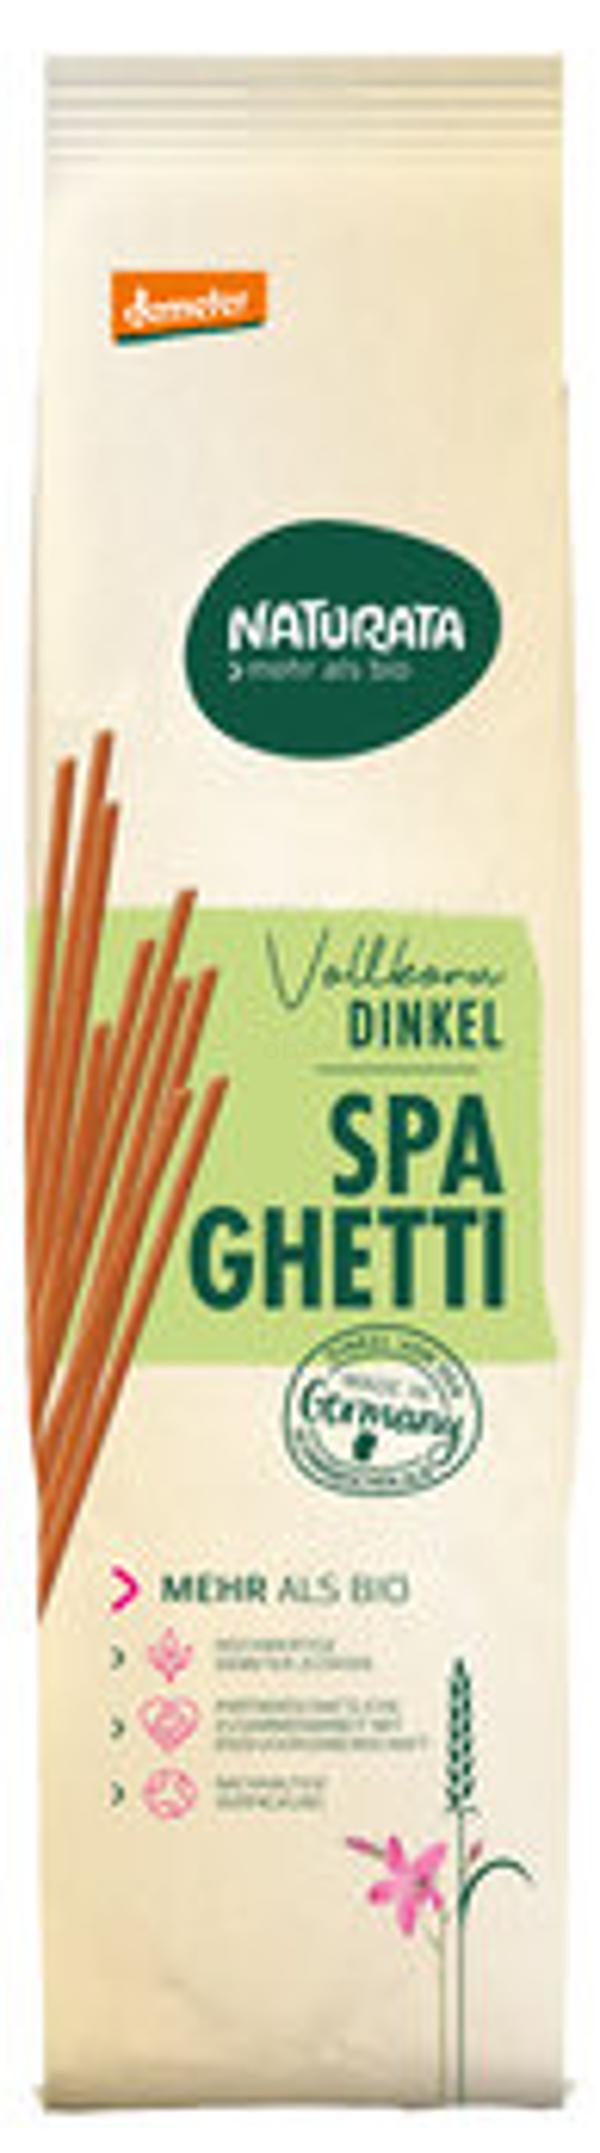 Produktfoto zu Dinkel-Spaghetti ,Vollkorn